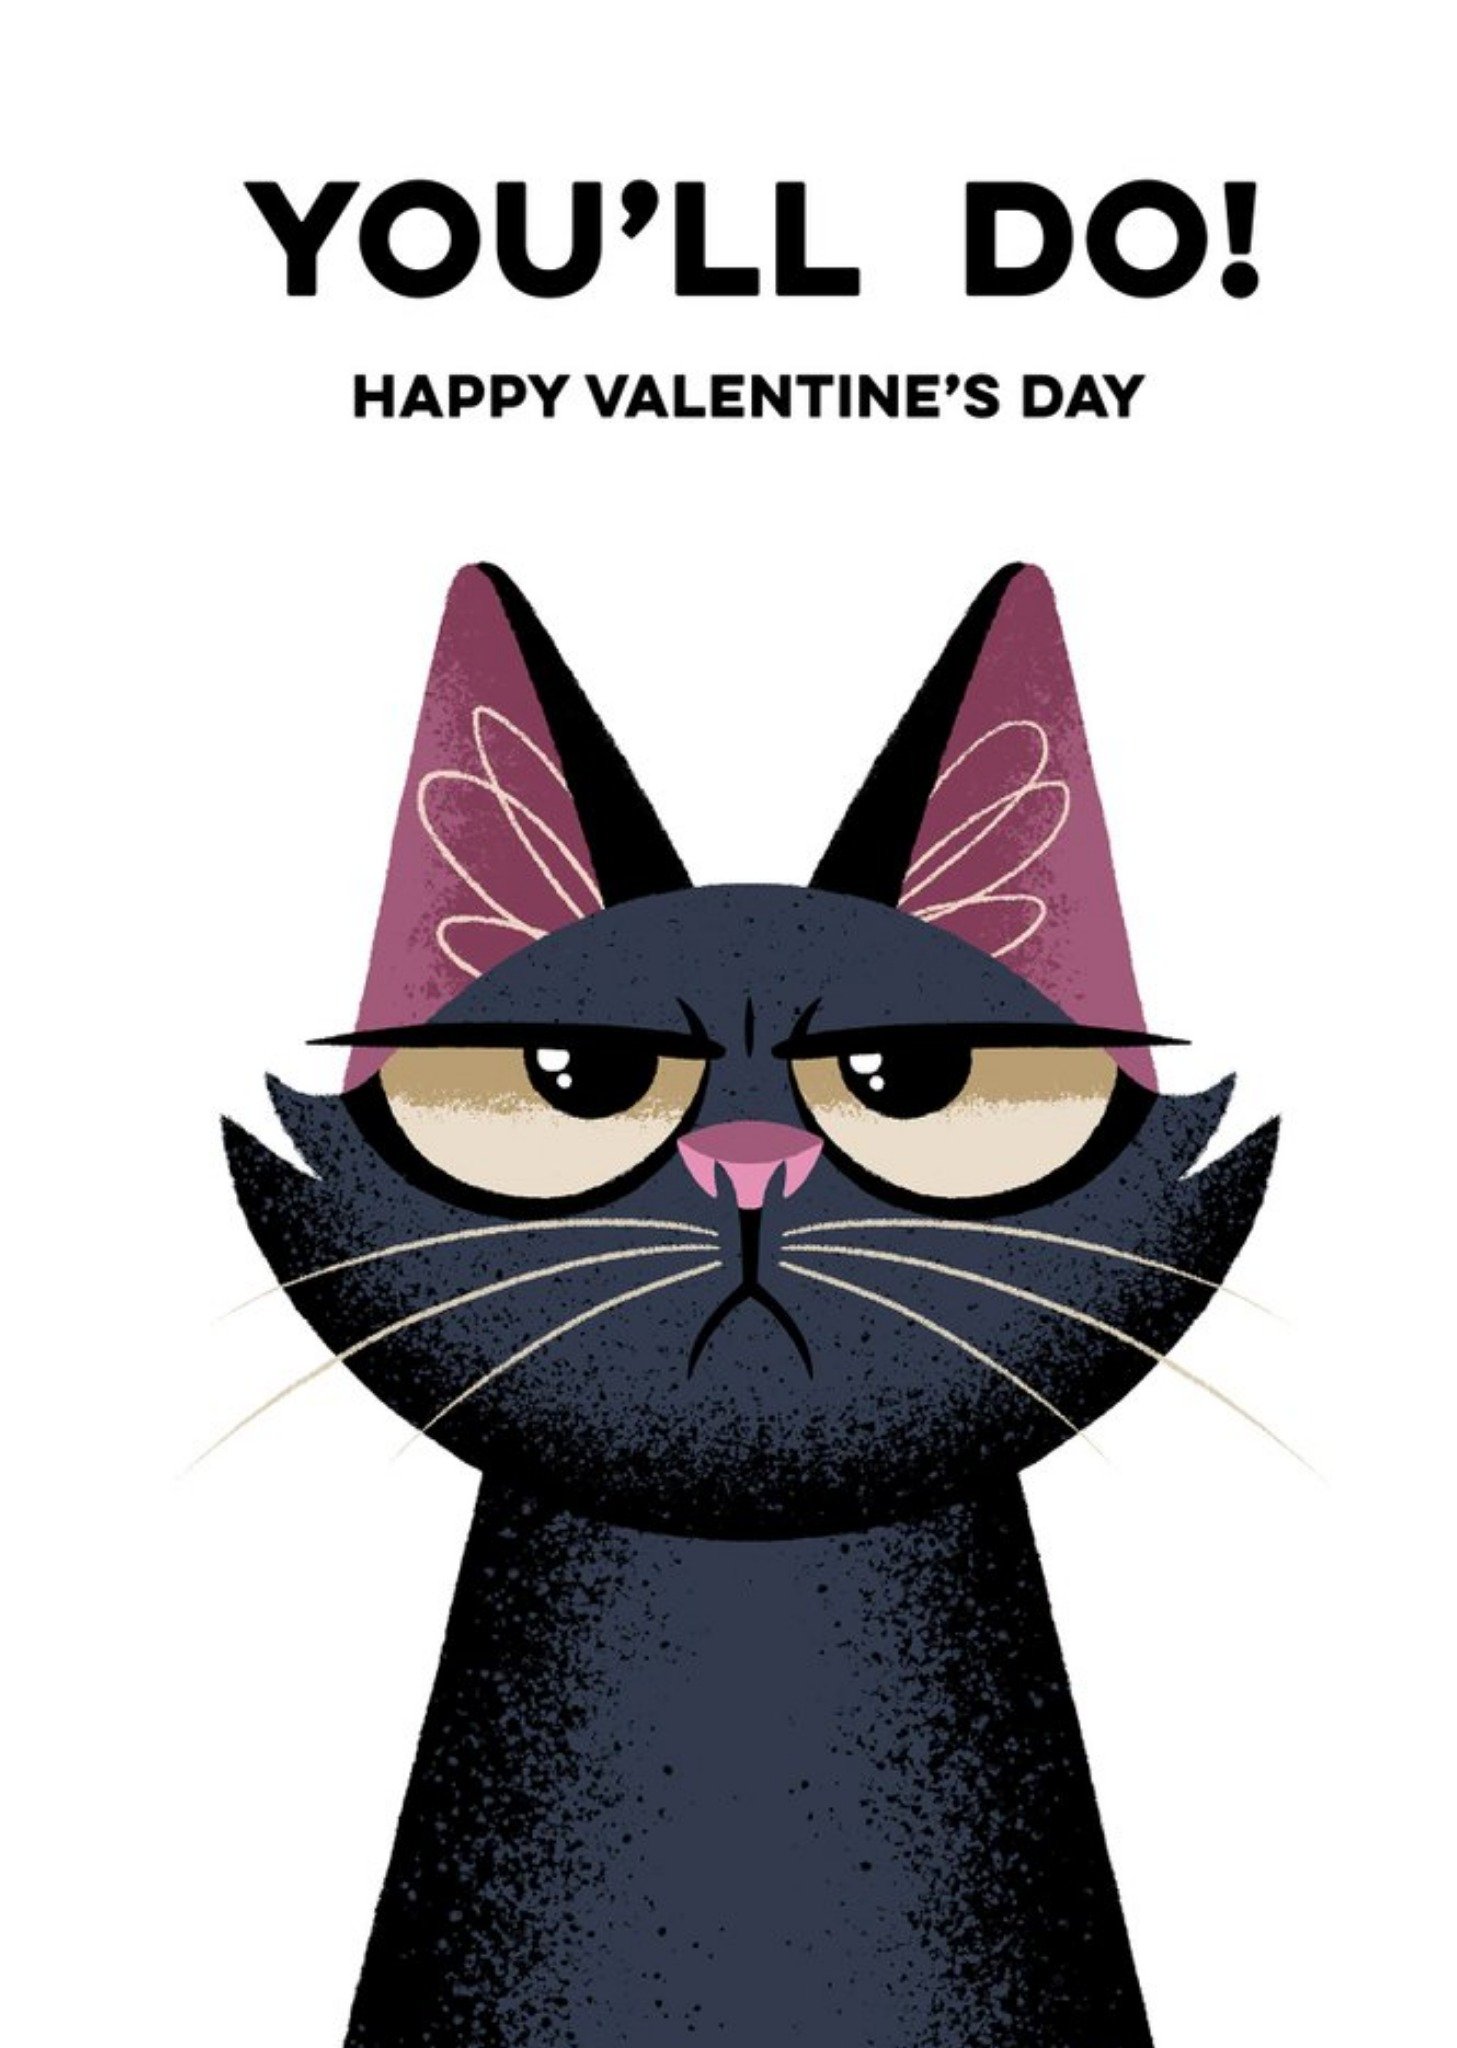 Moonpig Humorous Illustrated Grumpy Black Cat Valentine's Day Card, Large